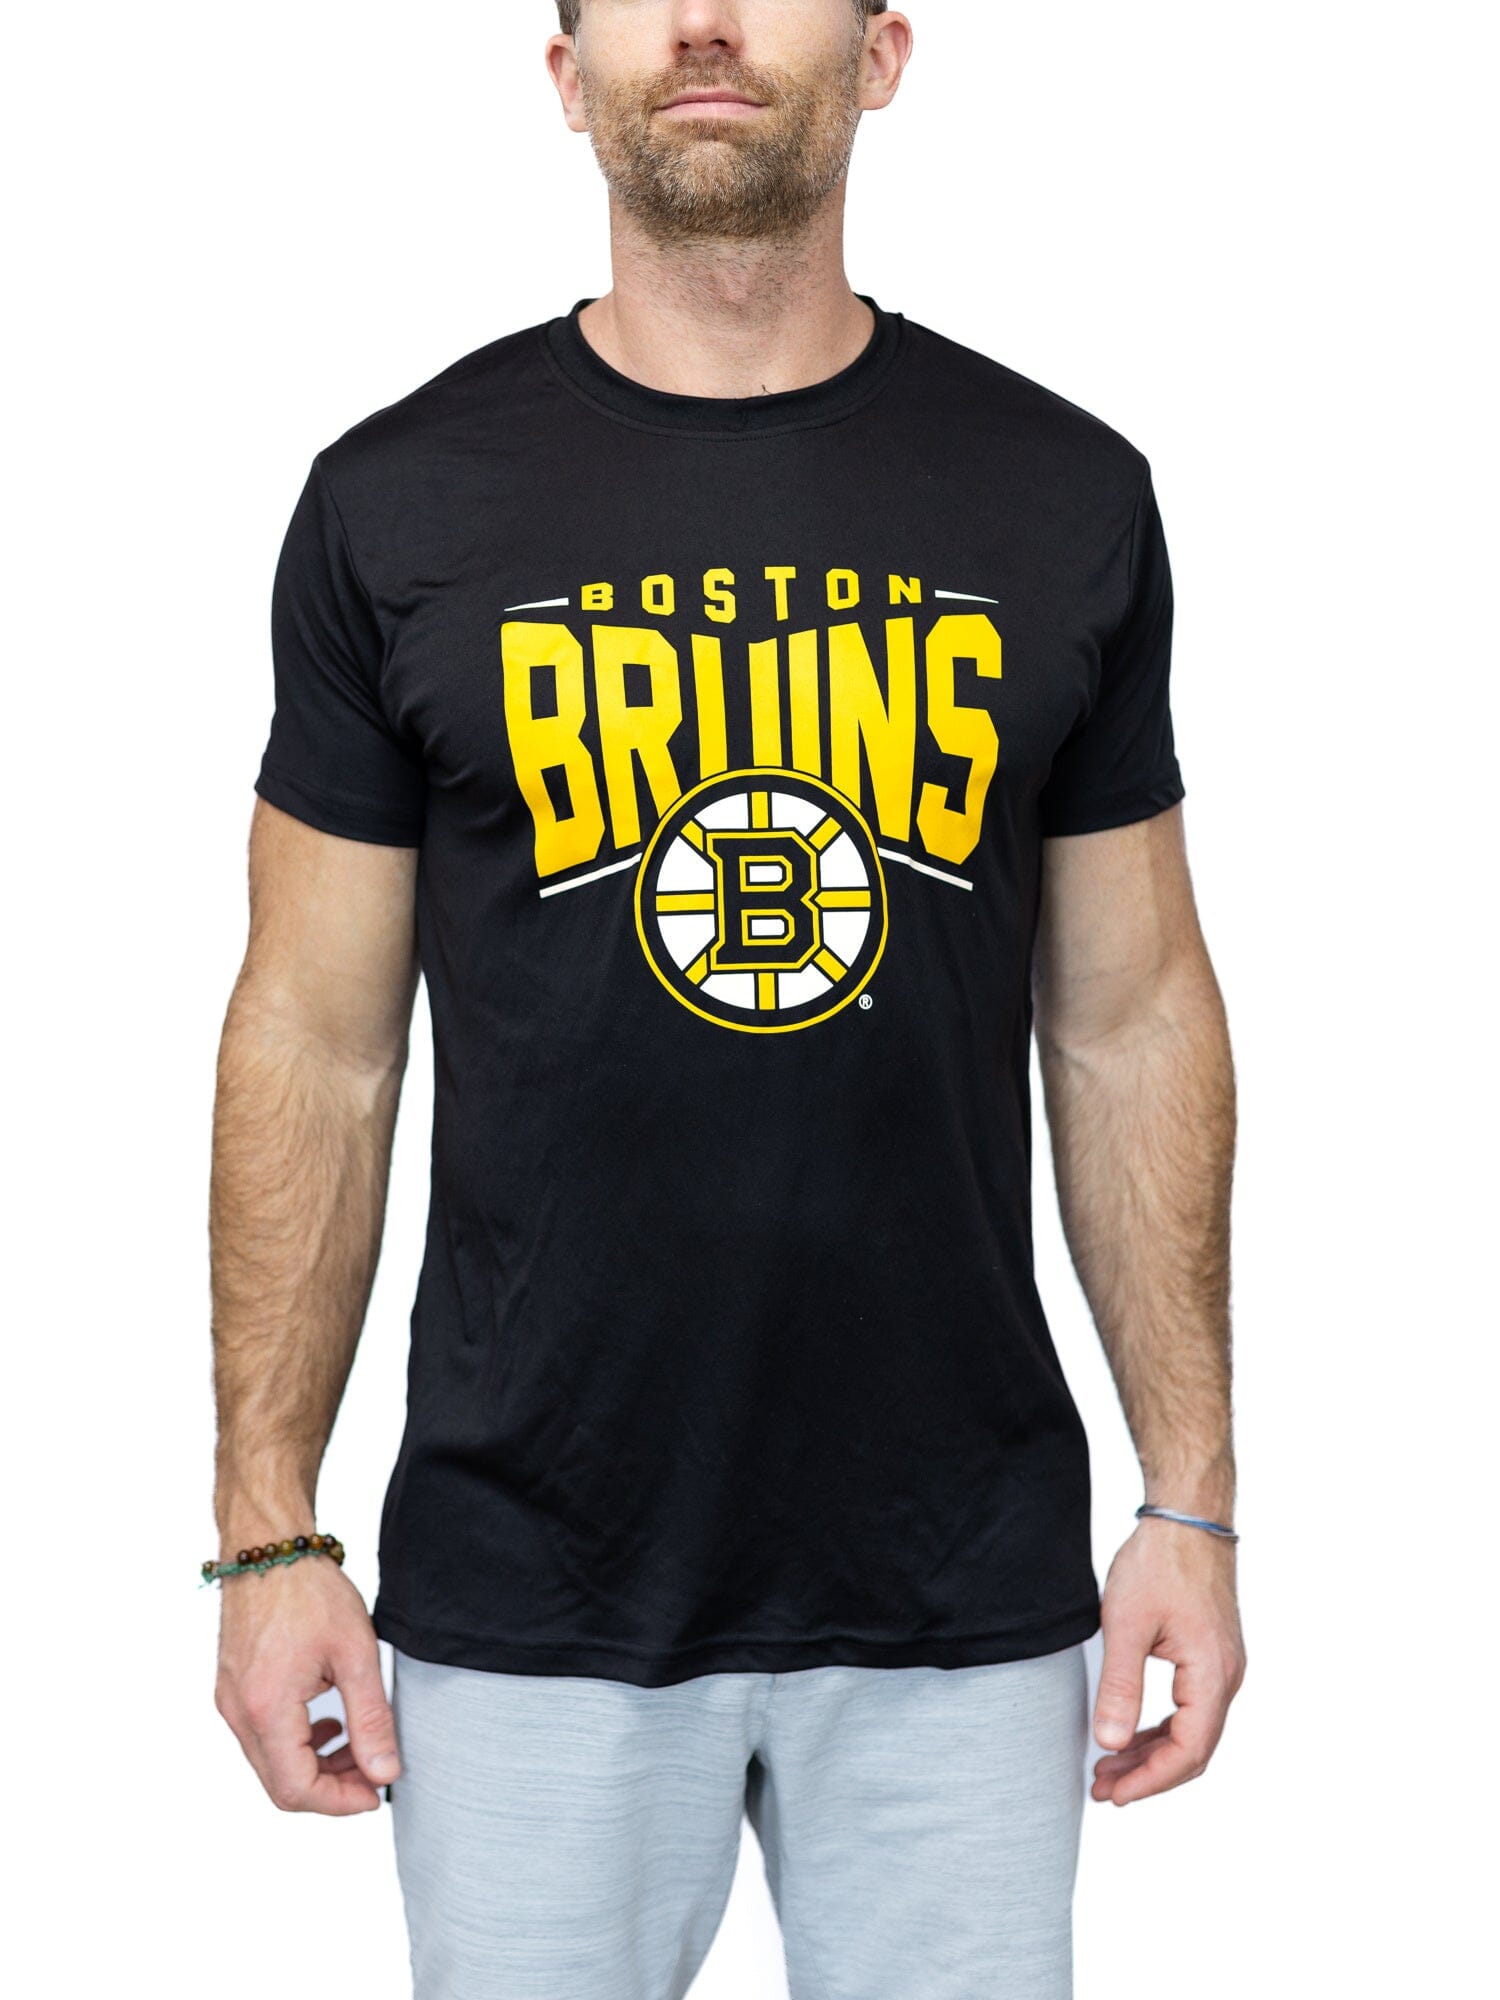 Boston Bruins XL jersey